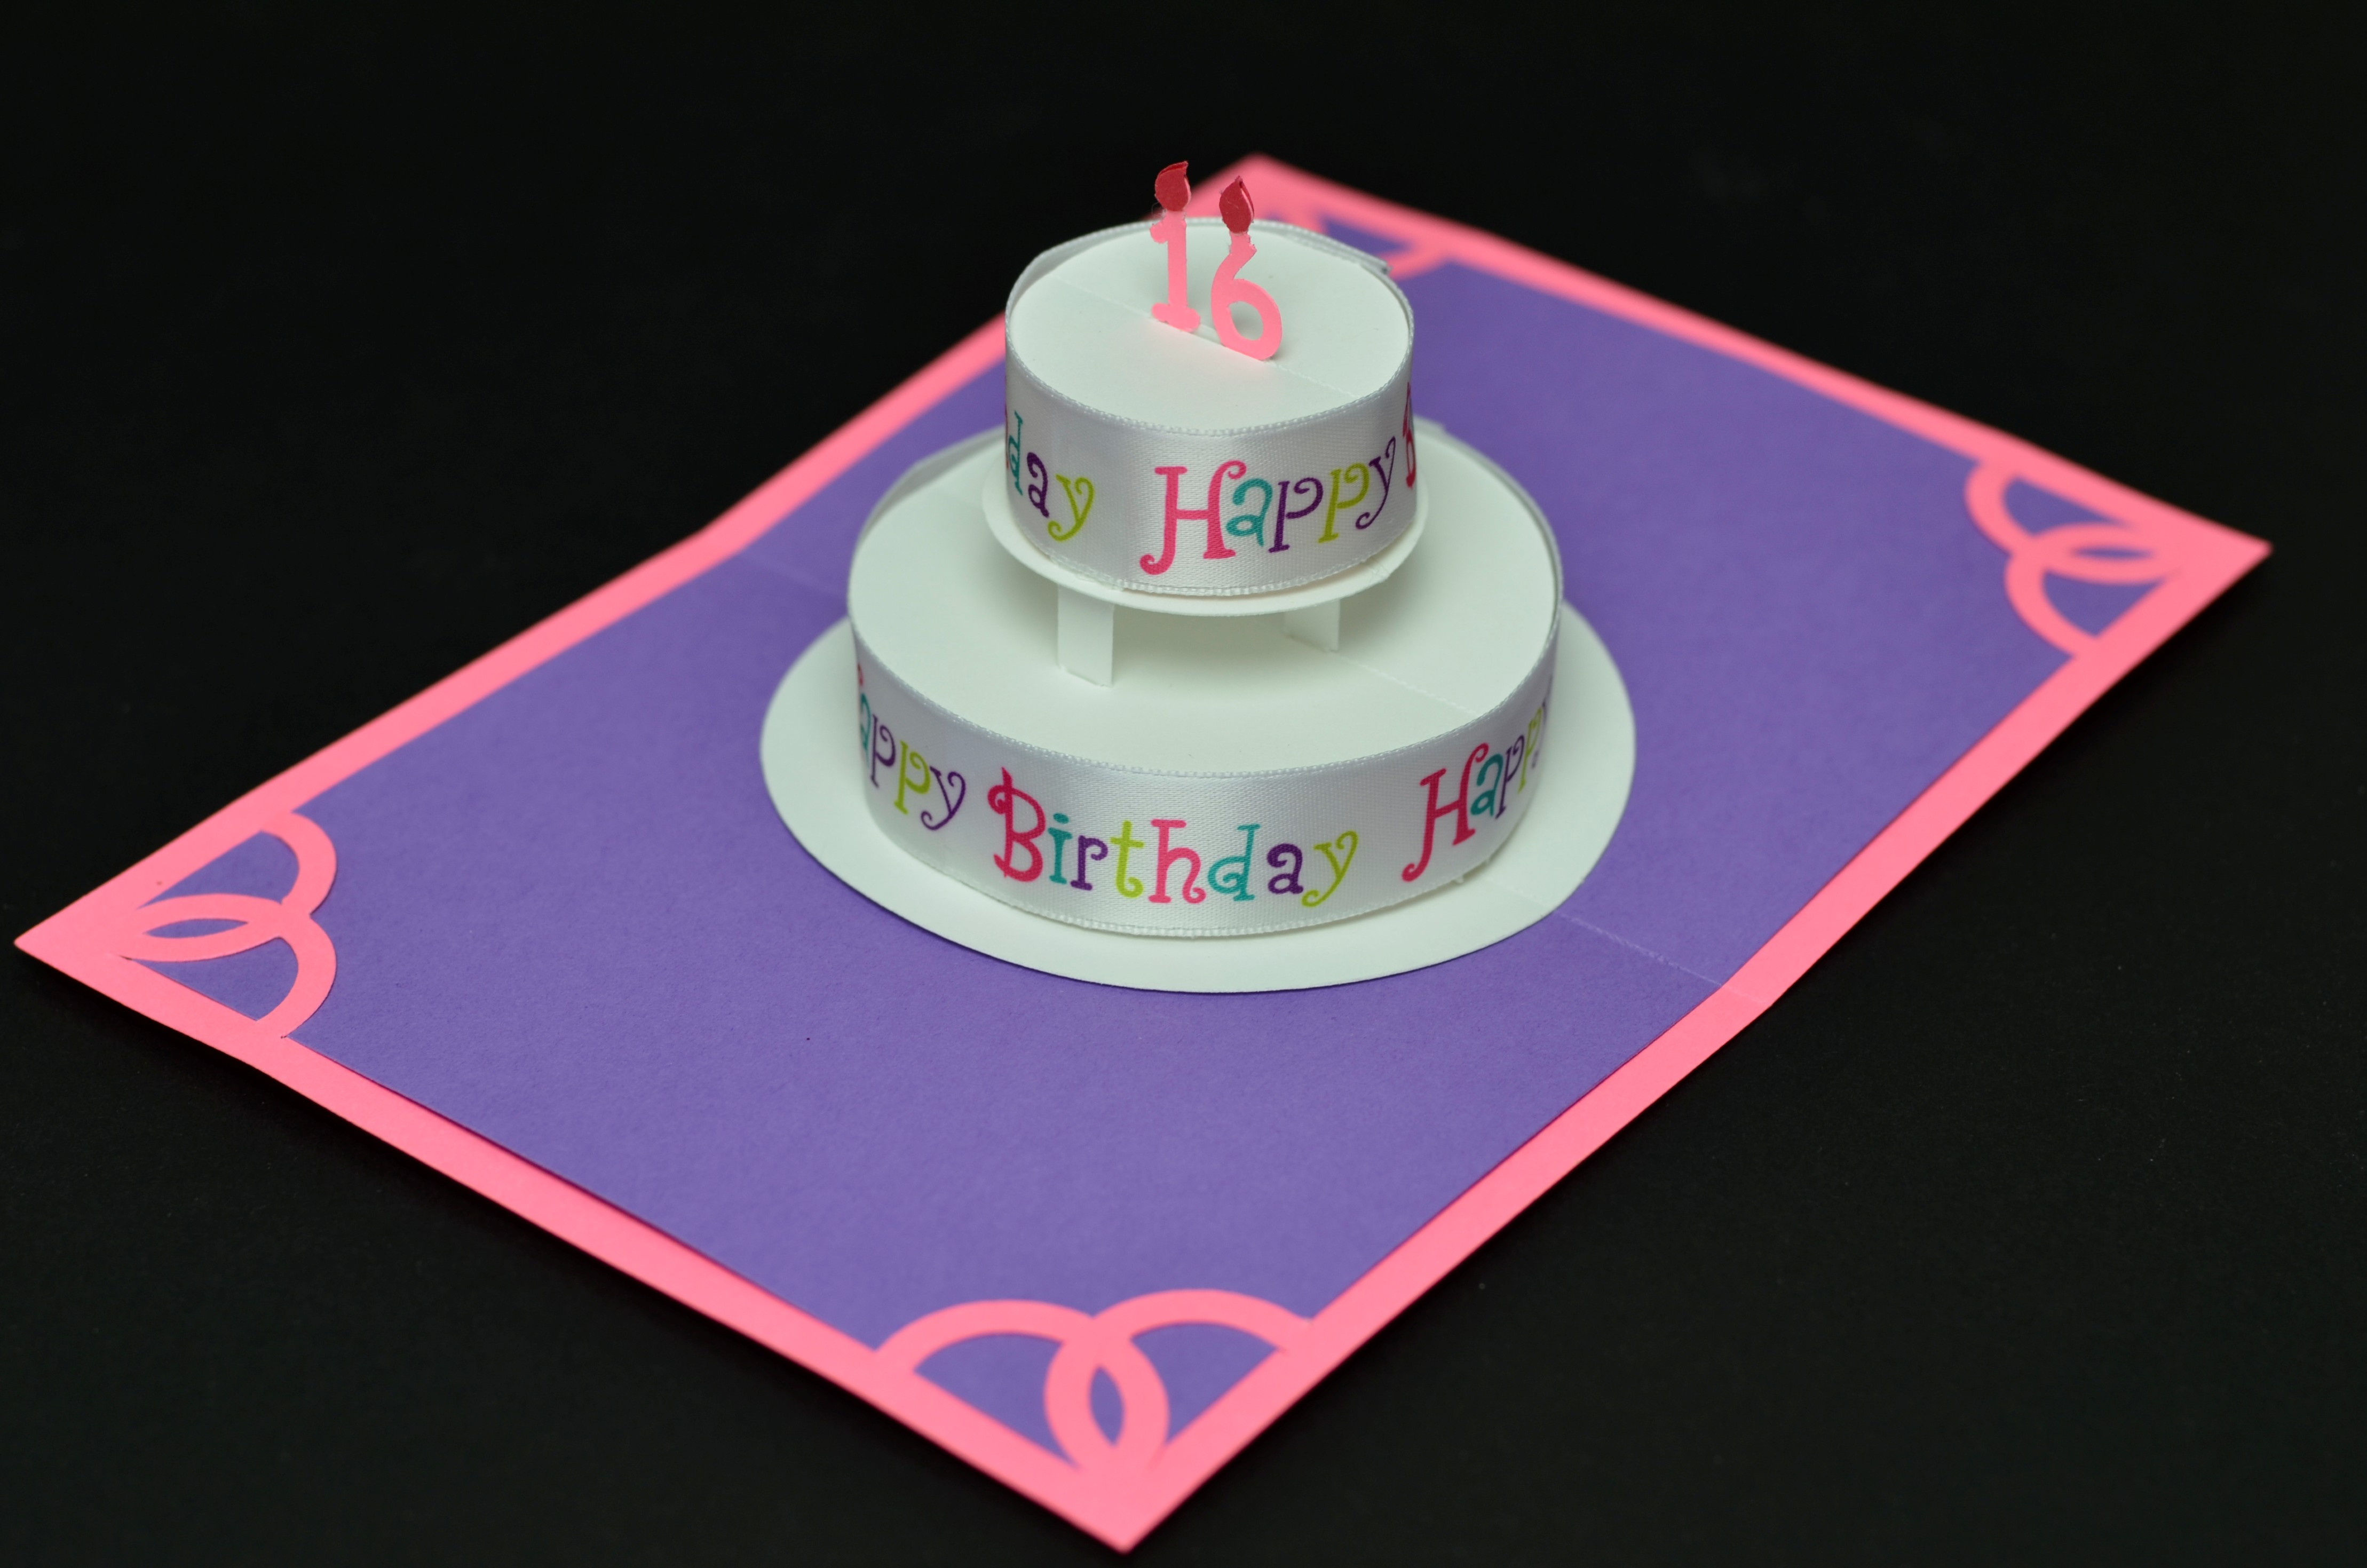 Birthday Cake Pop Up Card
 Round Birthday Cake Pop Up Card With "Happy Birthday